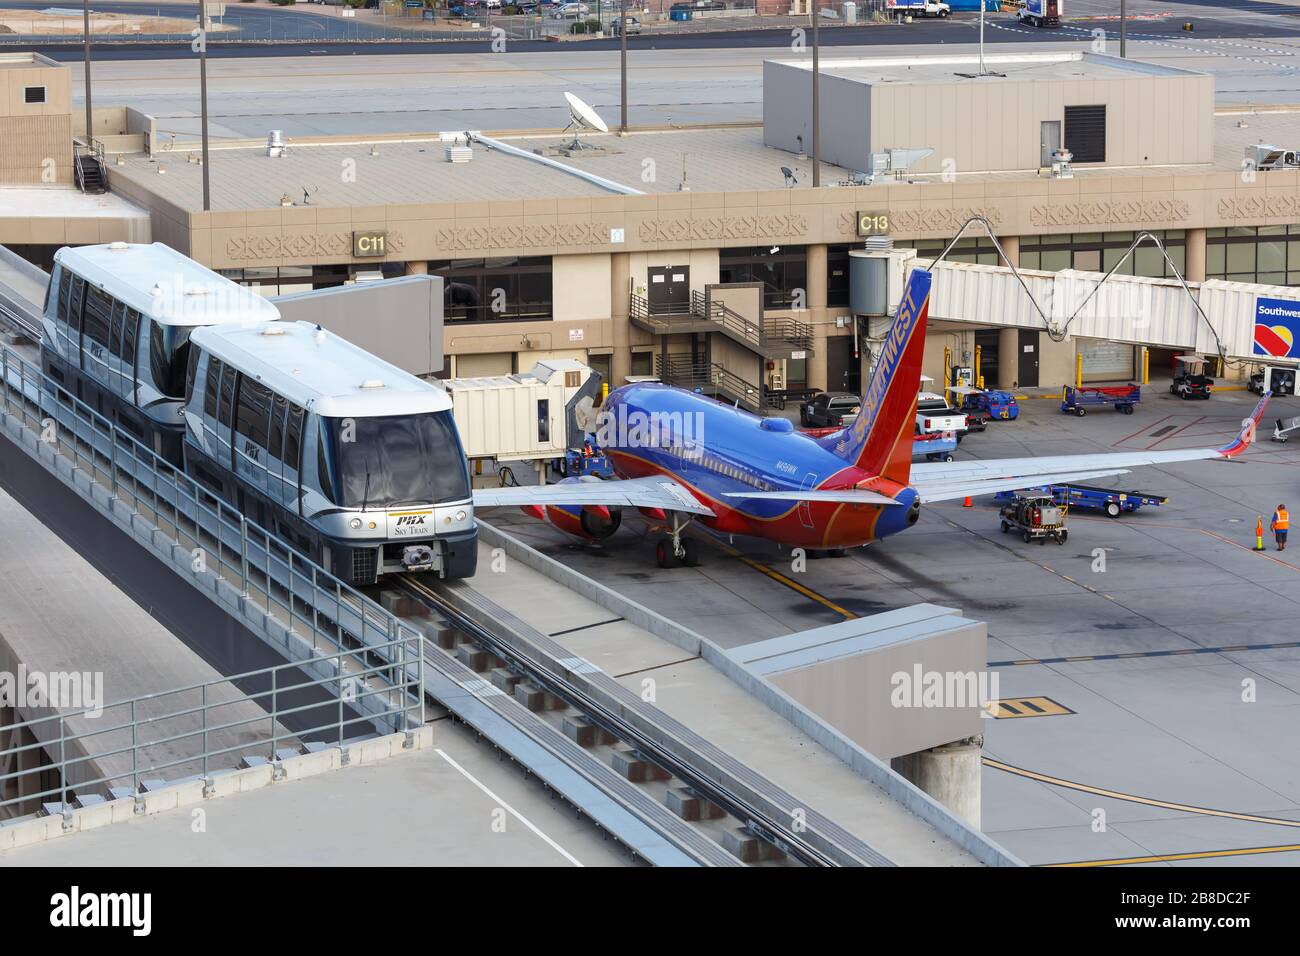 Phoenix, Arizona – April 8, 2019: Southwest Airlines Boeing 737-700 airplane at Phoenix Sky Harbor airport (PHX) in Arizona. Stock Photo